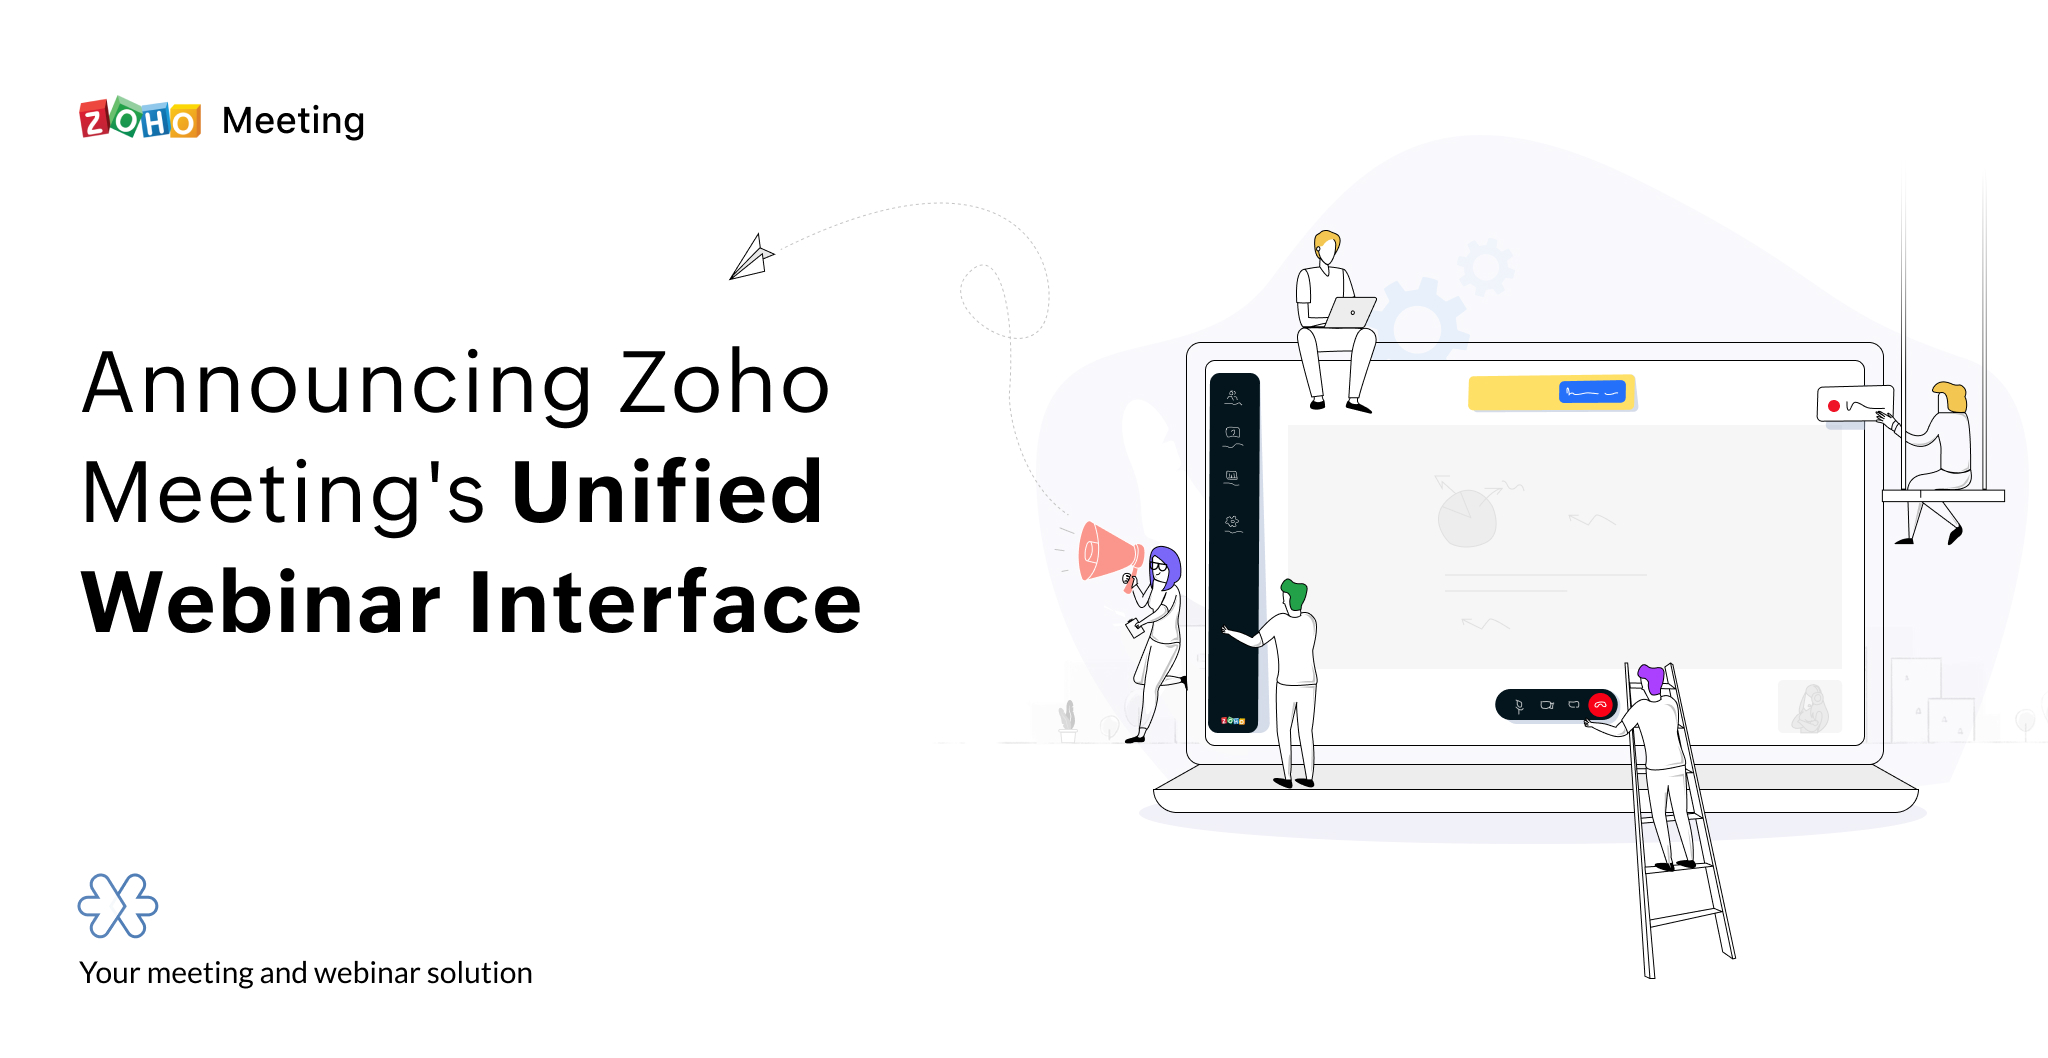 Introducing Zoho Meeting's Interactive Webinar User Interface!